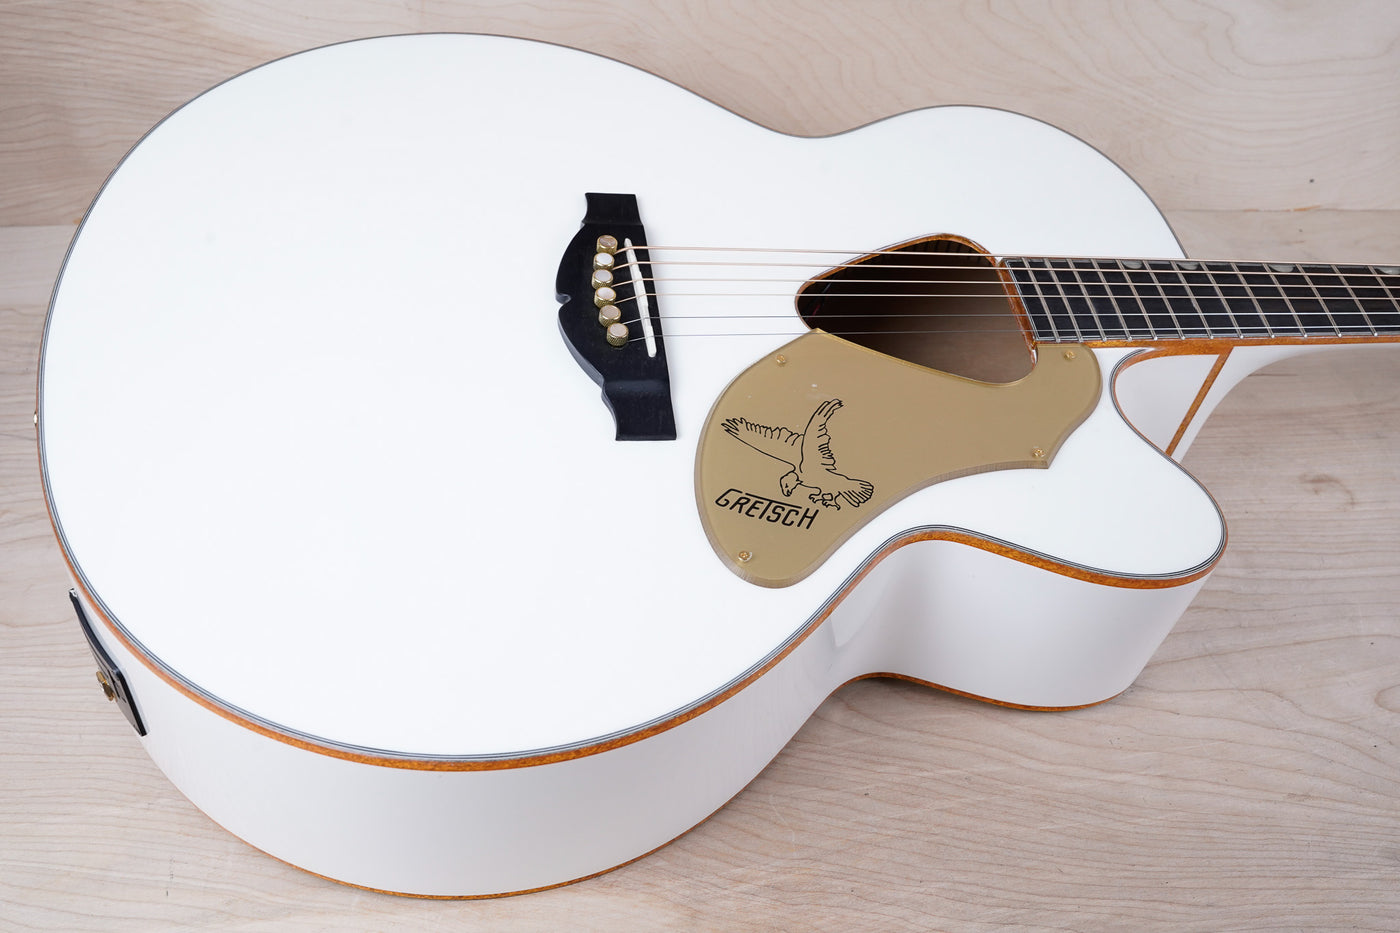 Gretsch G5022CWFE Rancher Falcon Acoustic Guitar 2014 White w/ Bag